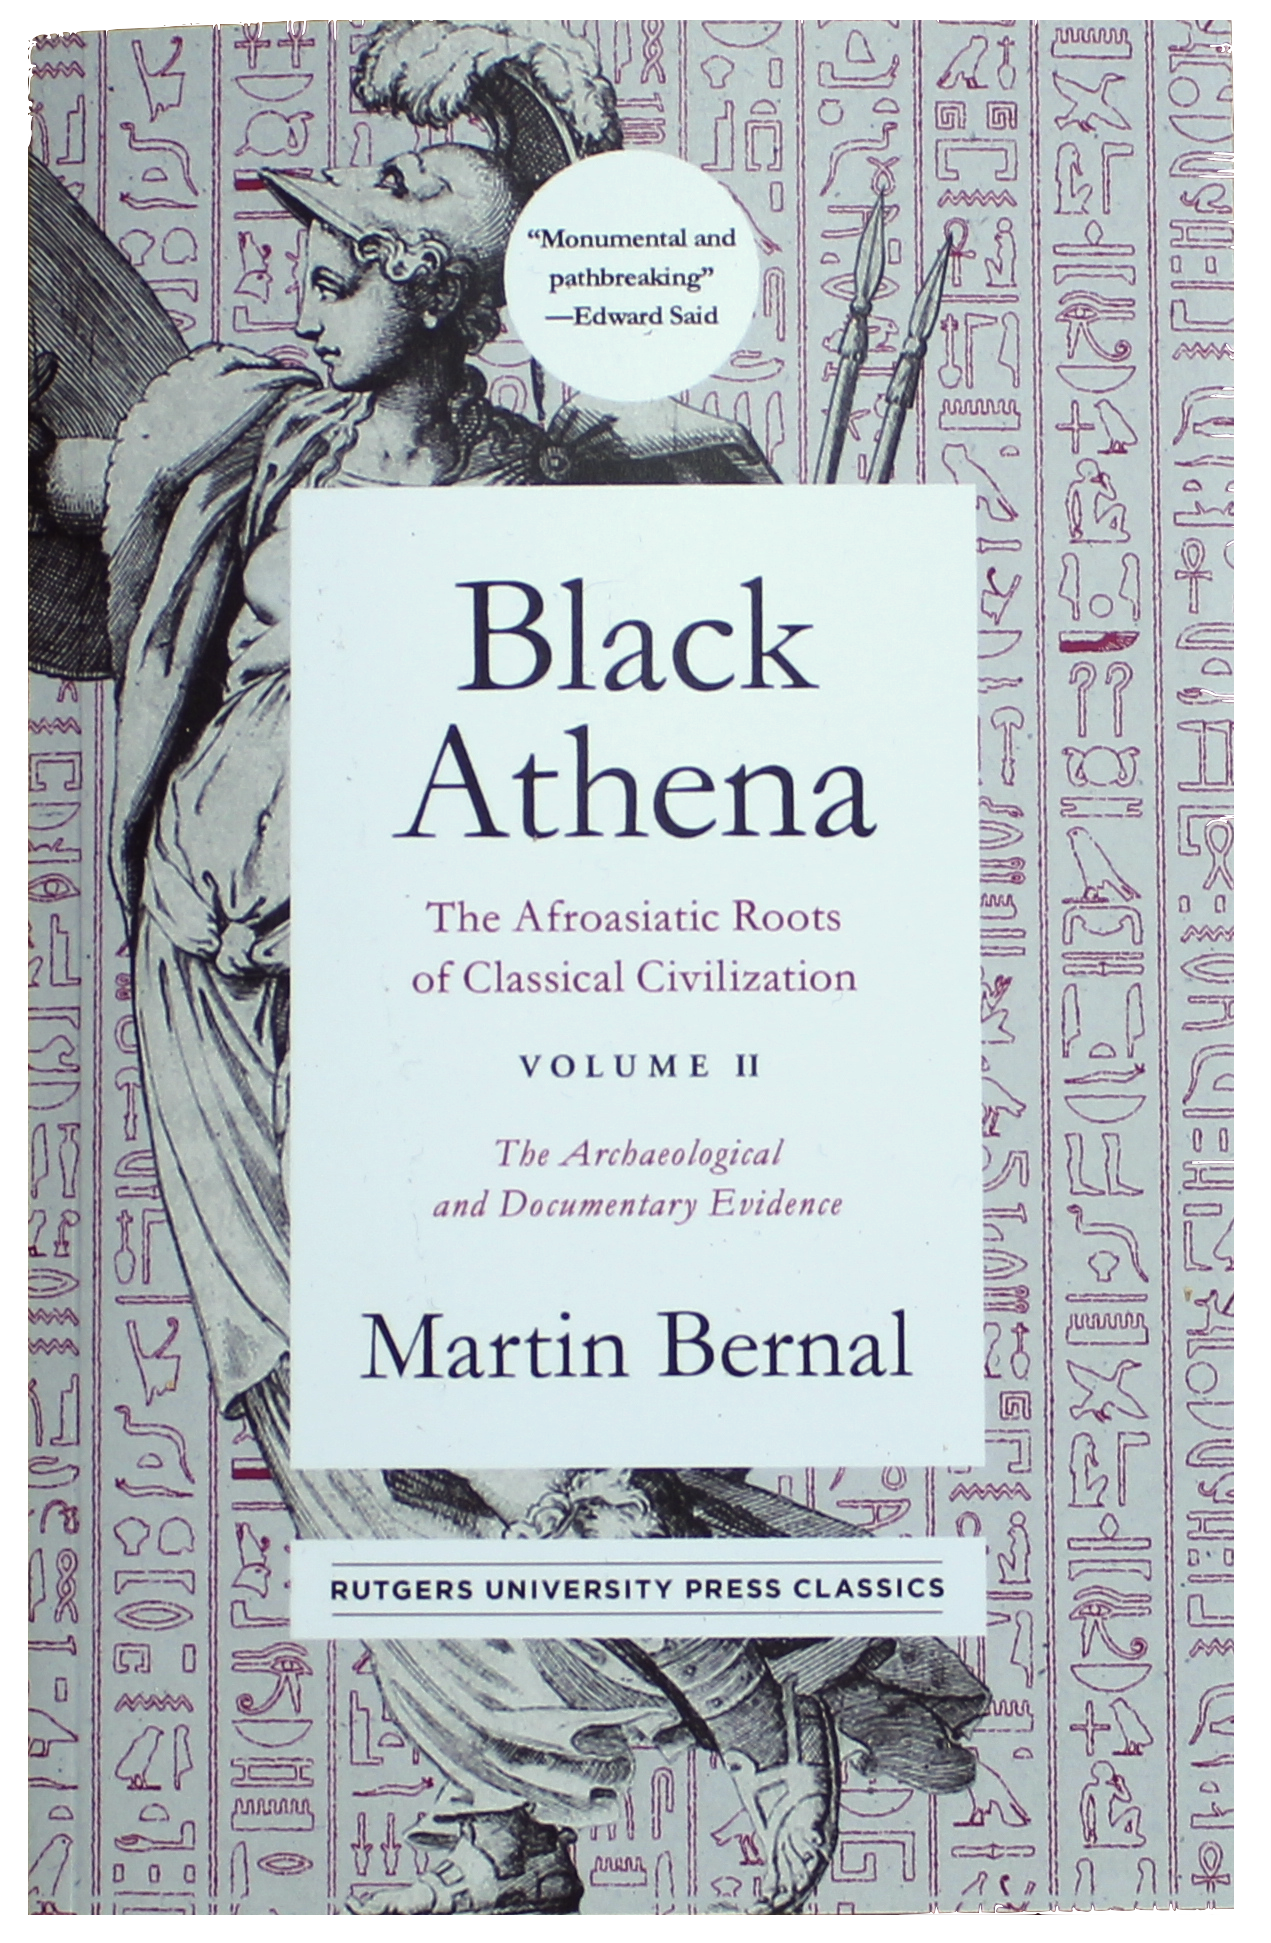 Black Athena Volume II: The Archaeological and Documentary Evidence - Martin Bernal